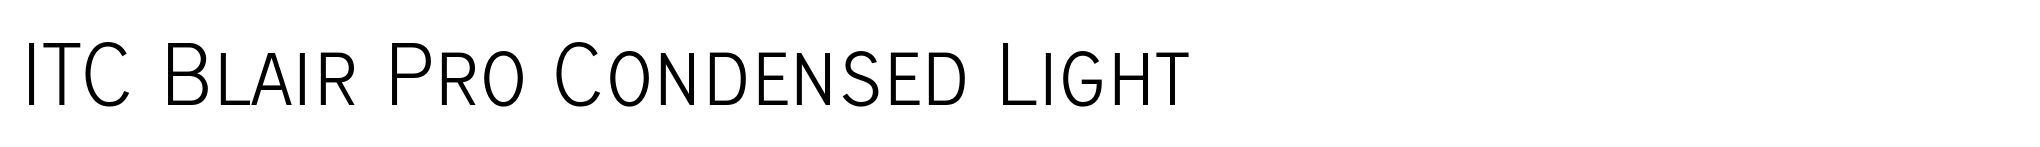 ITC Blair Pro Condensed Light image